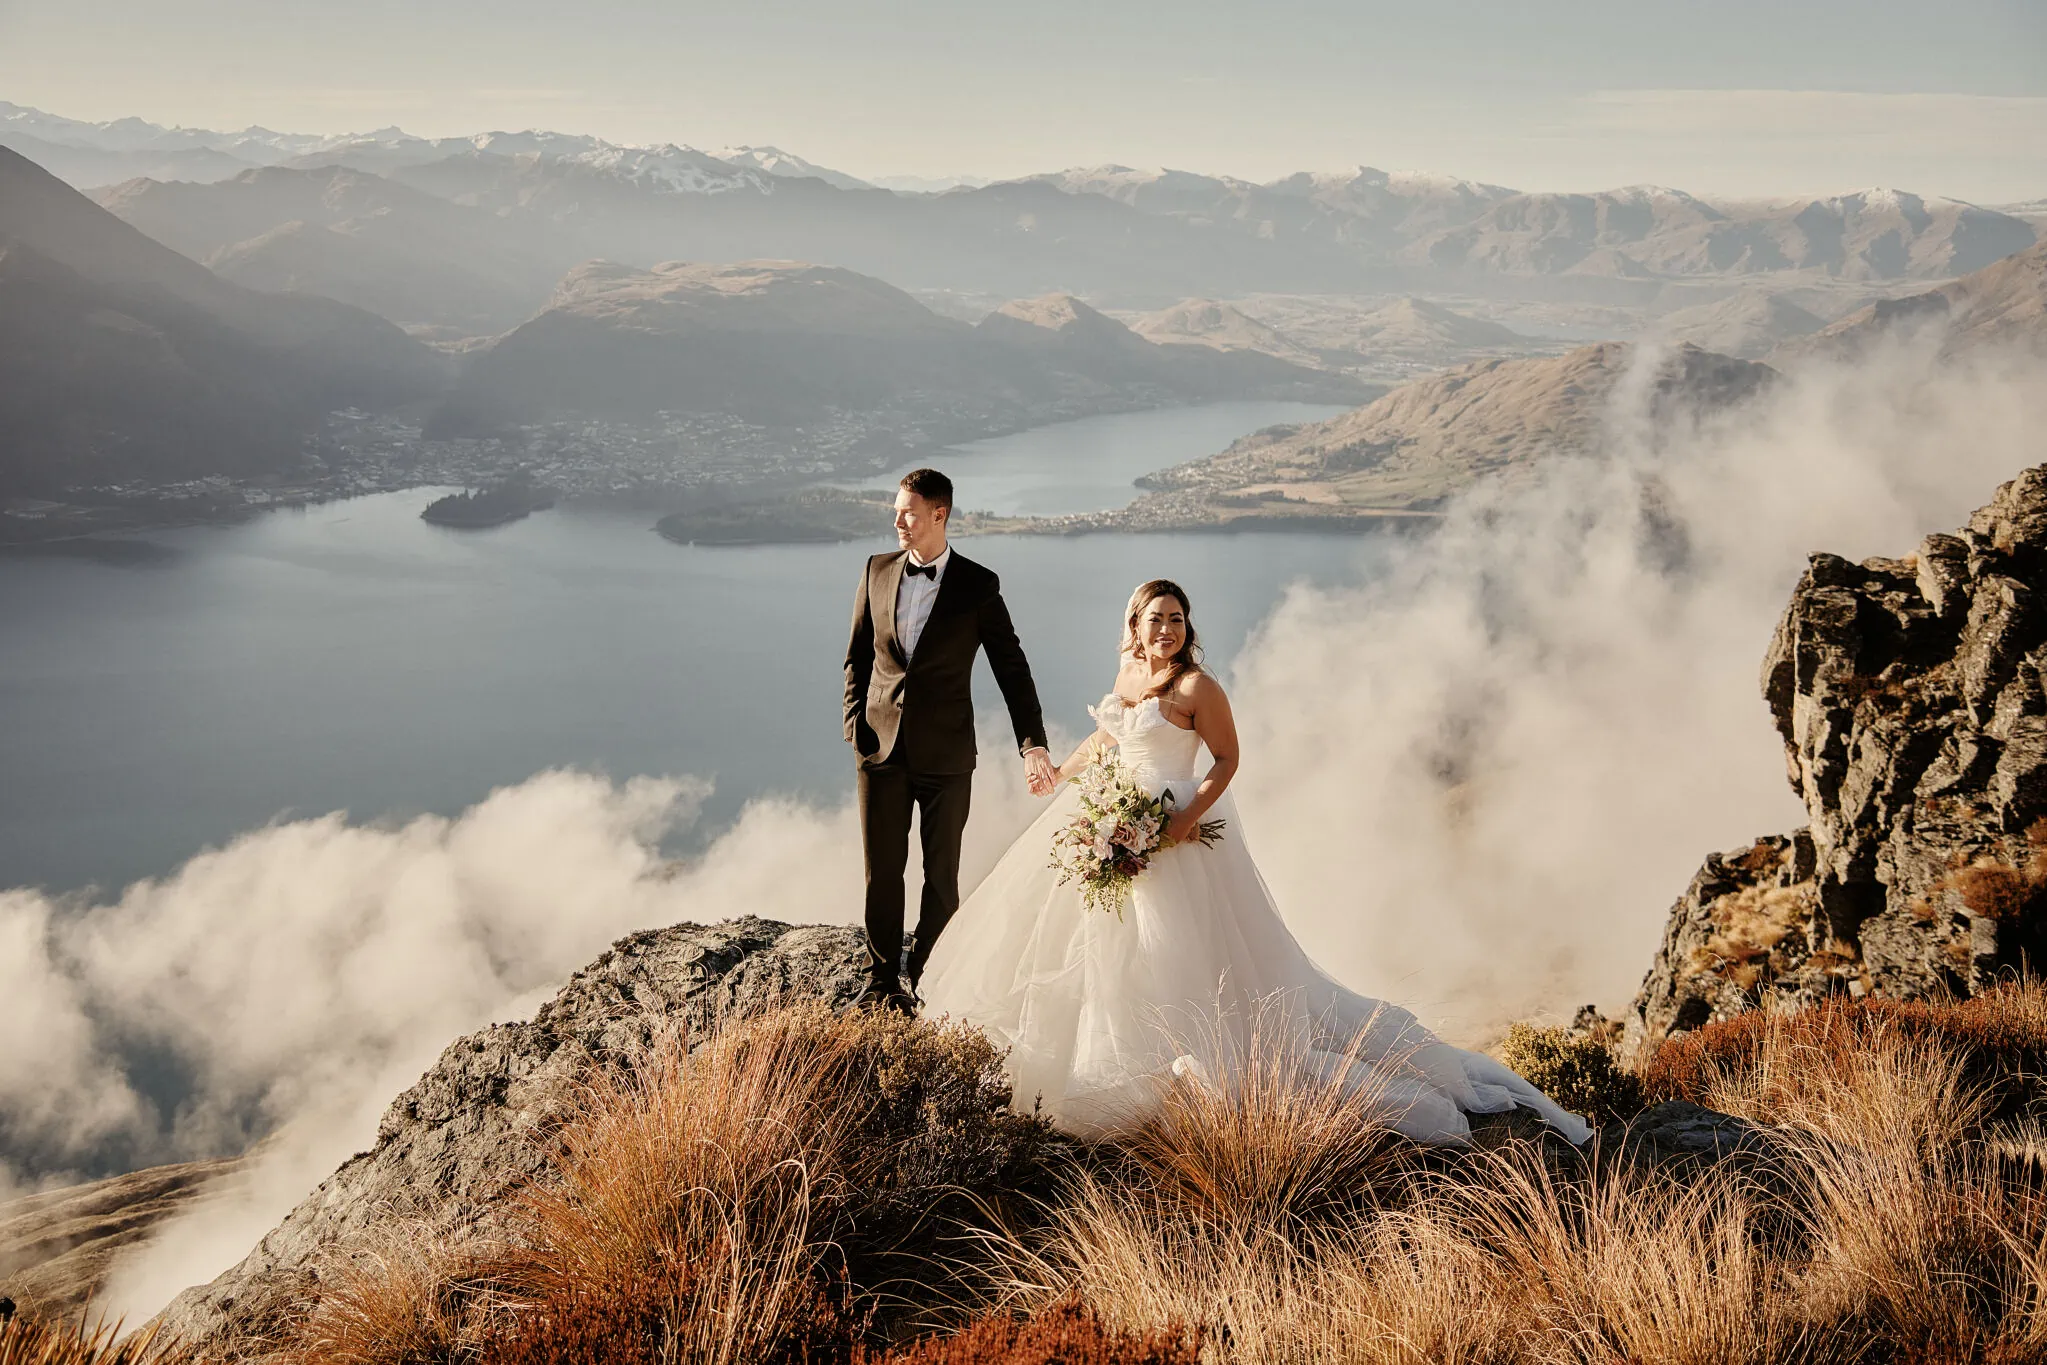 Queenstown New Zealand Elopement Wedding Photographer - Amy and Callum's Queenstown Heli Pre Wedding Shoot captures the couple standing on top of a mountain overlooking Lake Wanaka.